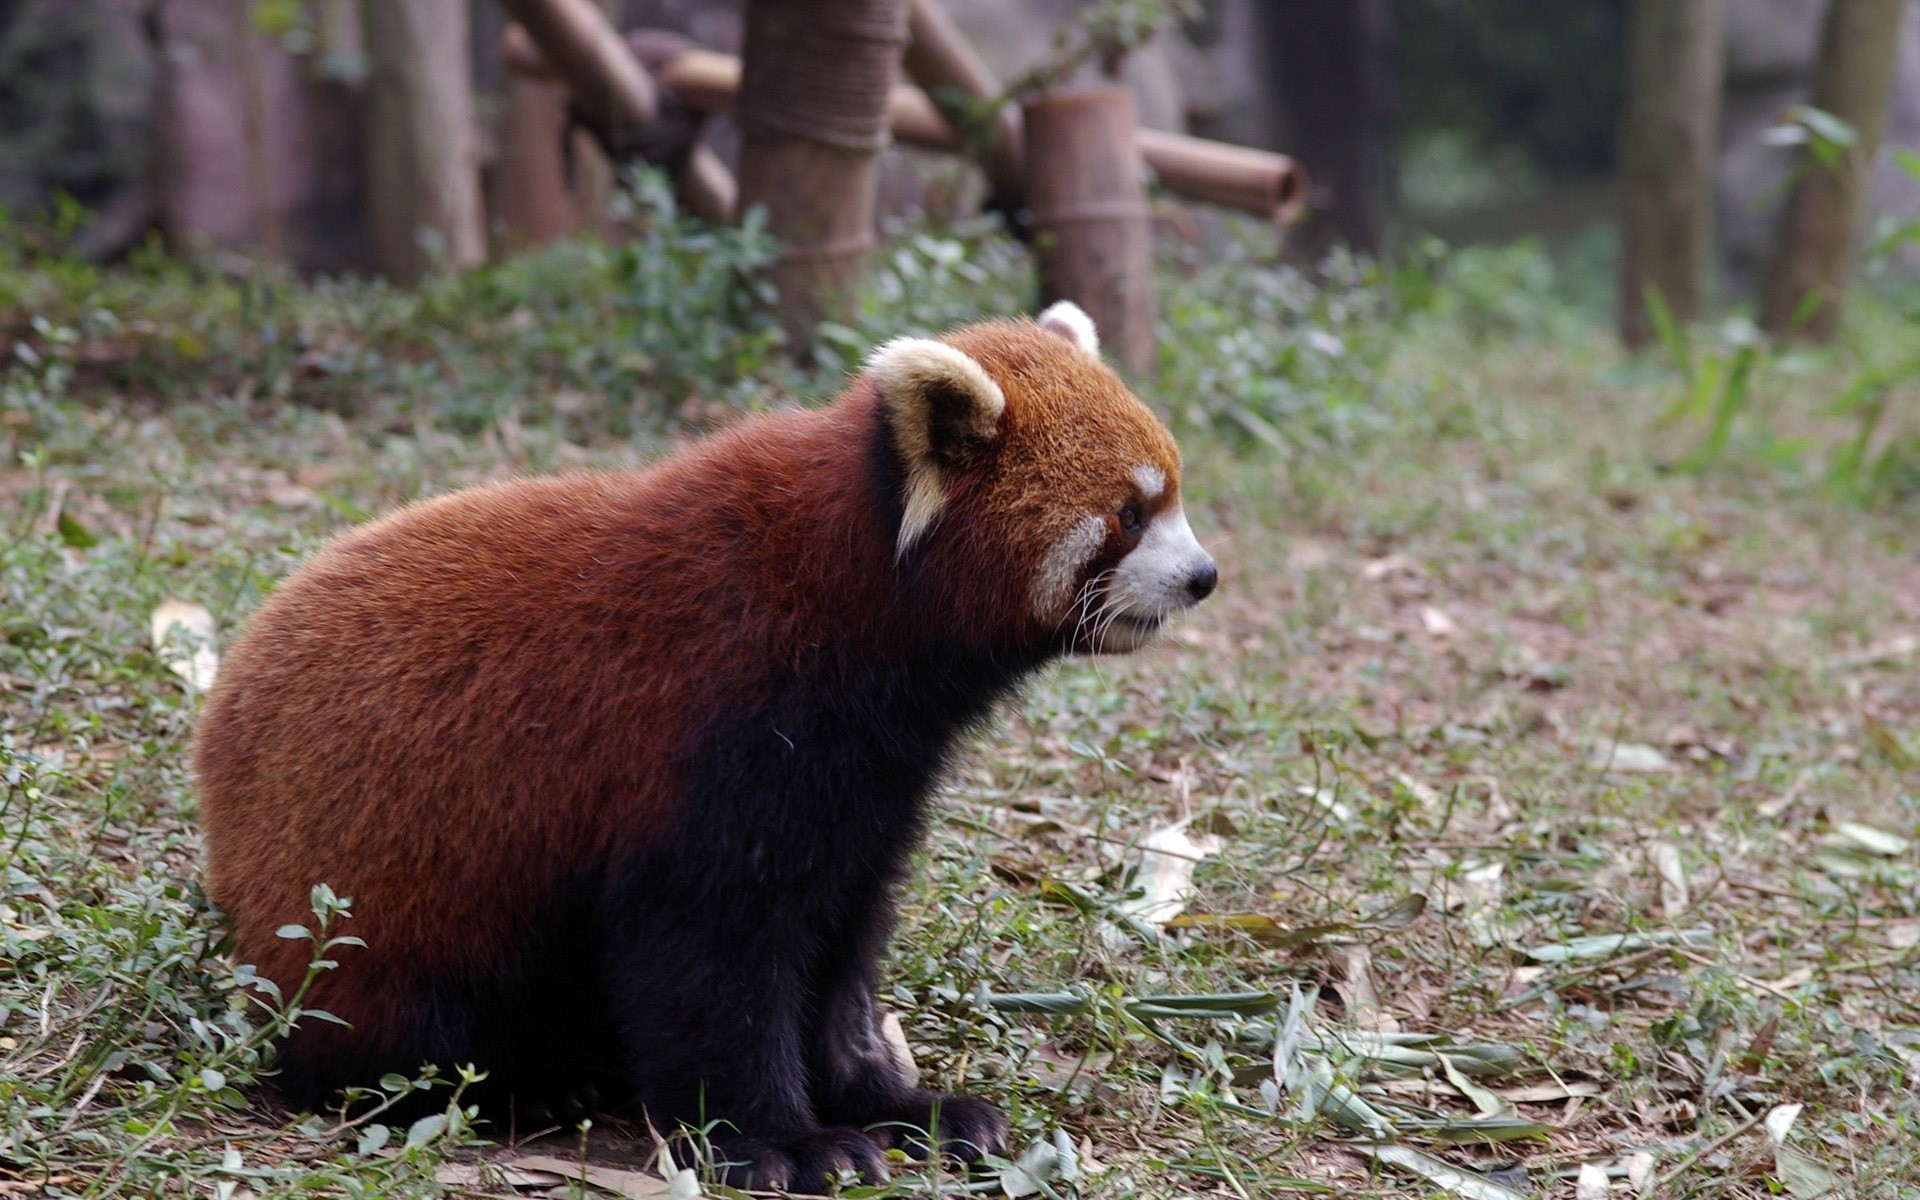 animals mammal wildlife animal zoo nature outdoors fur cute wood wild grass panda red panda